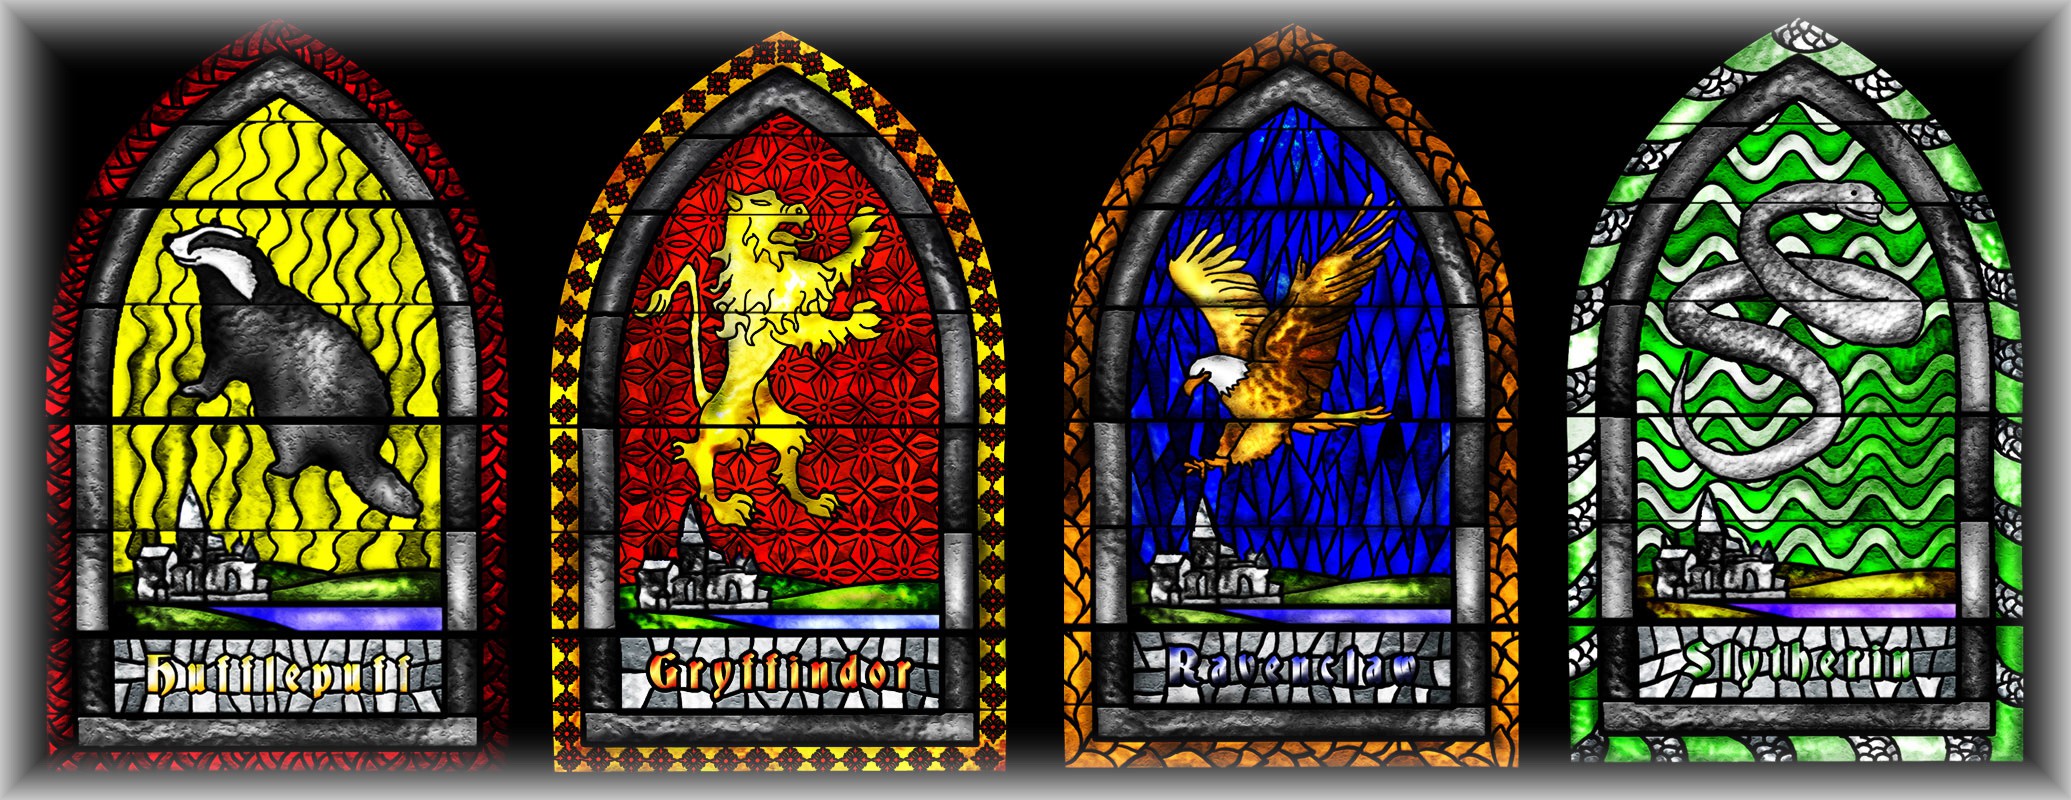 hogwarts_houses_windows_by_guad.jpg